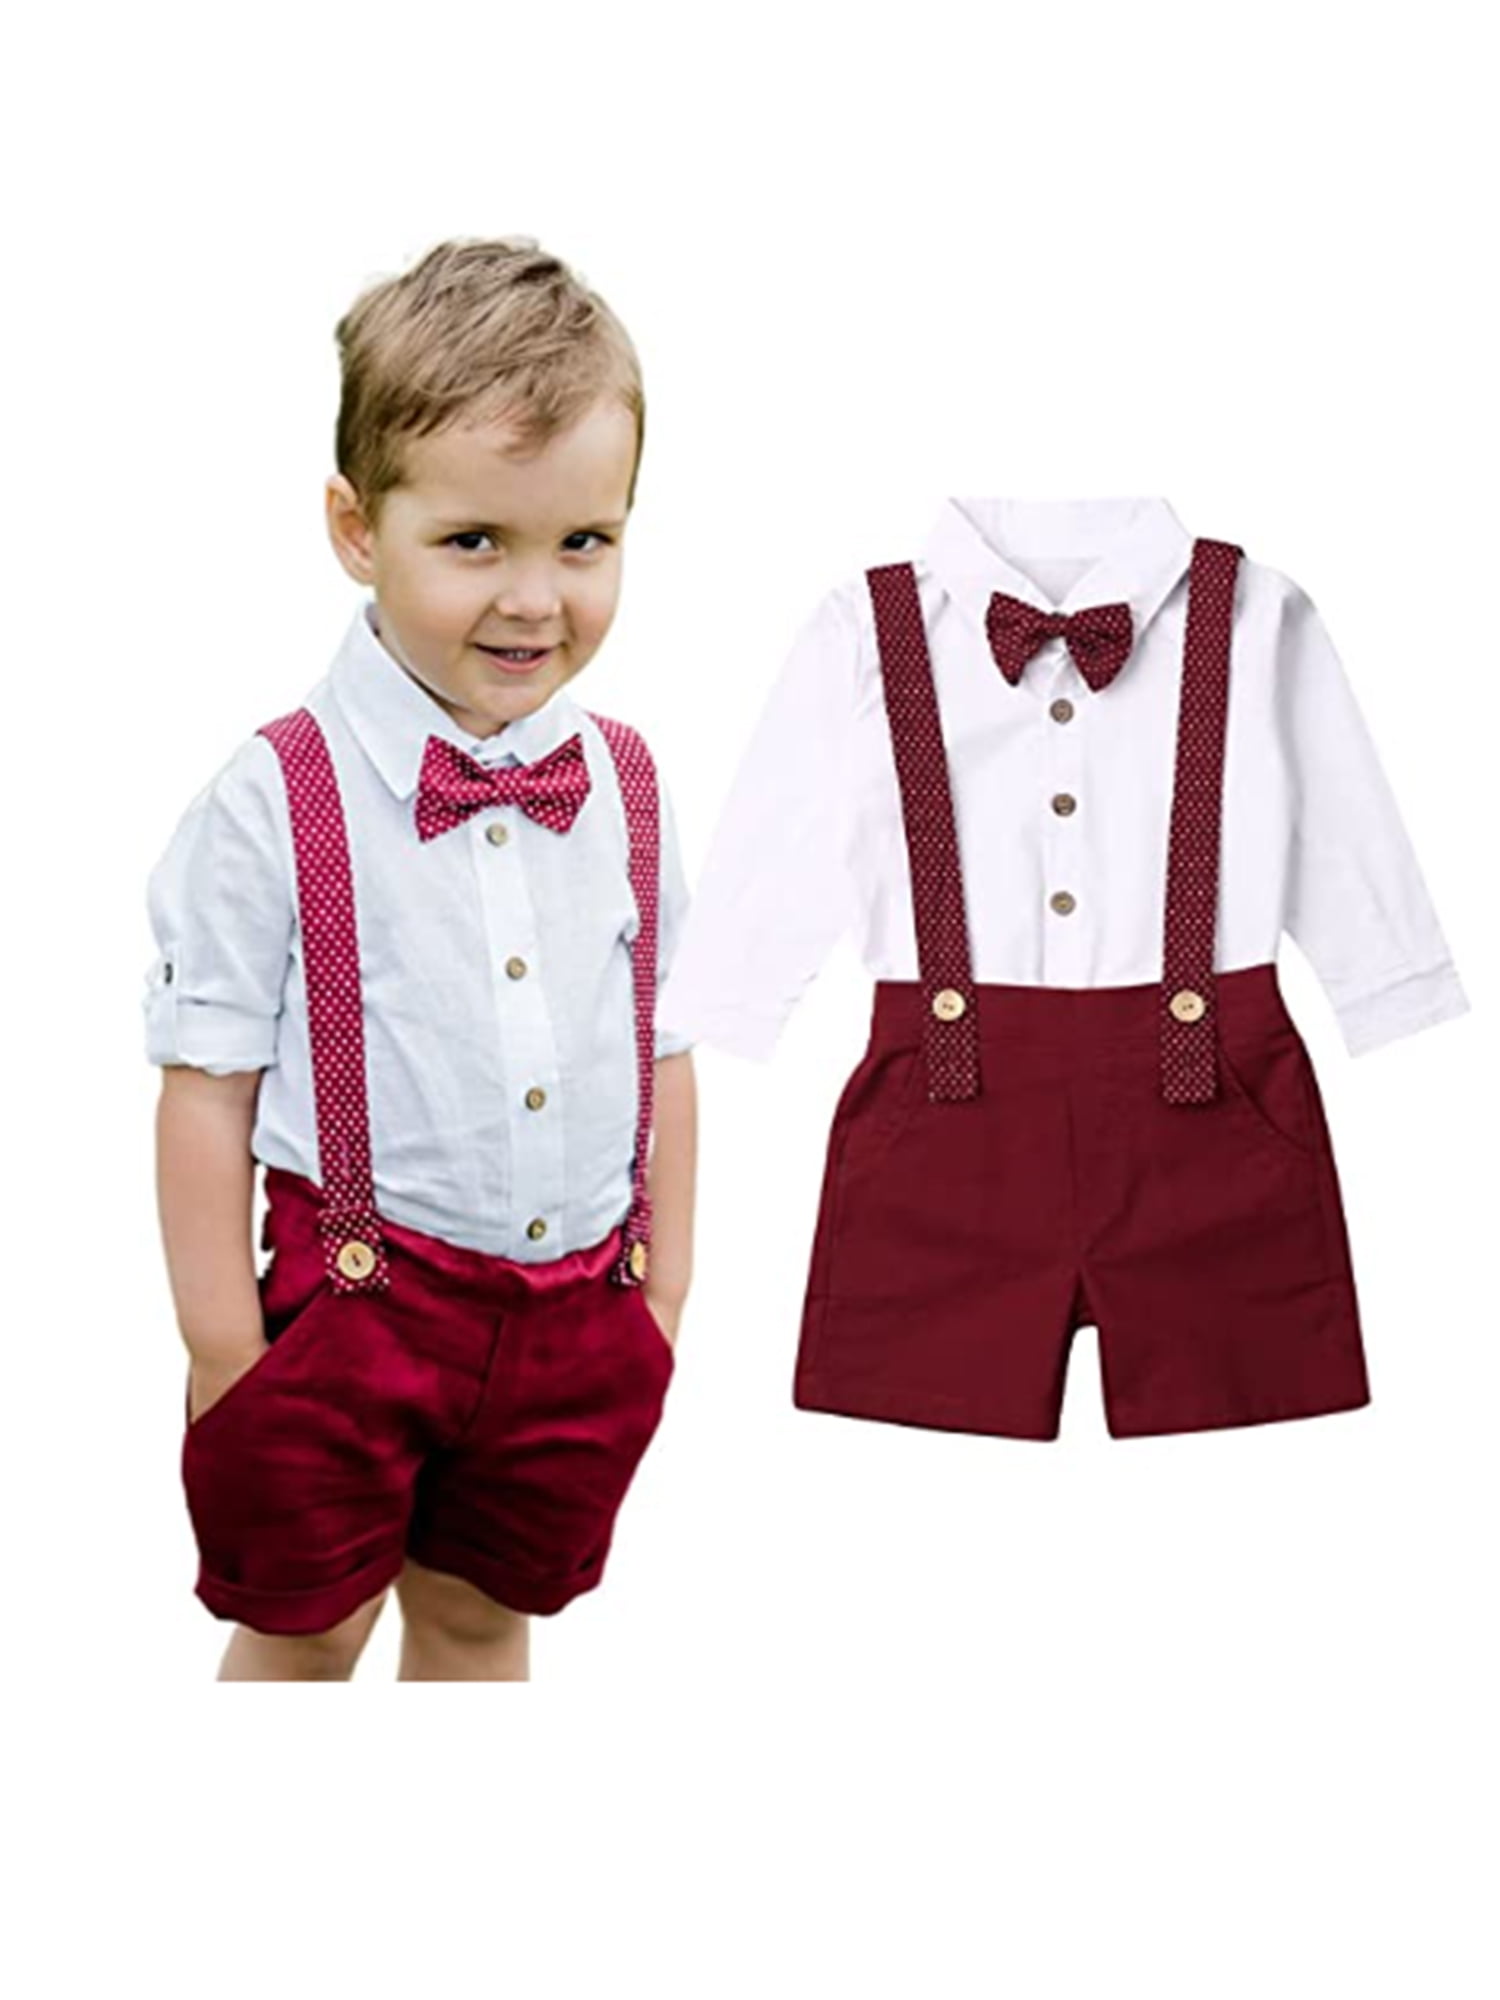 Baby Boy Linen Pants Shop - tundraecology.hi.is 1694342915